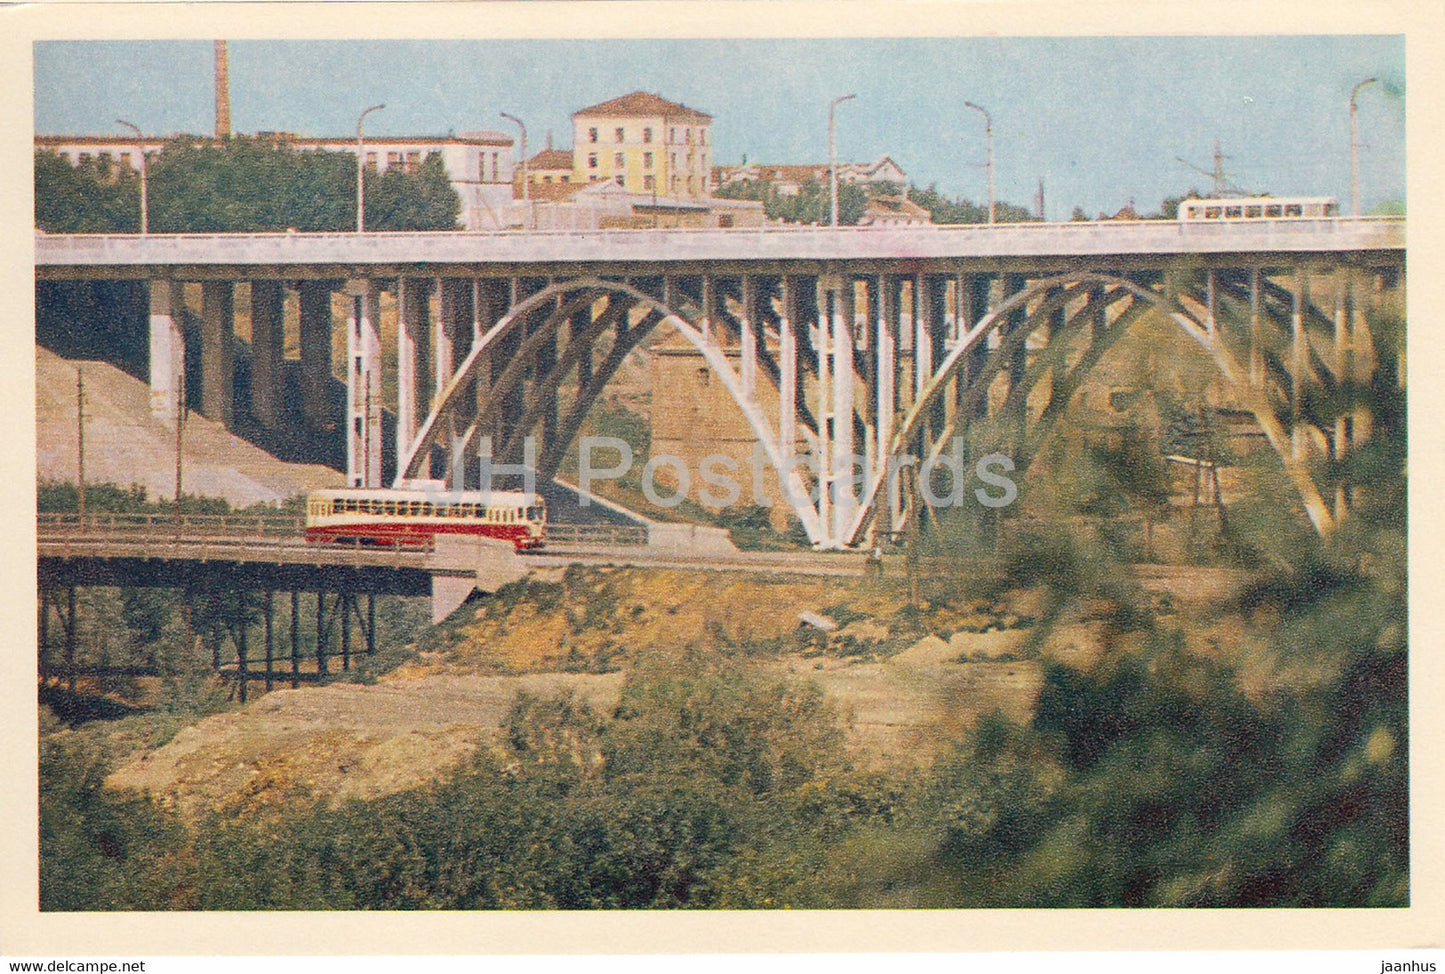 Volgograd - Bridge over the river Tsaritsa - tram - Russia USSR - unused - JH Postcards